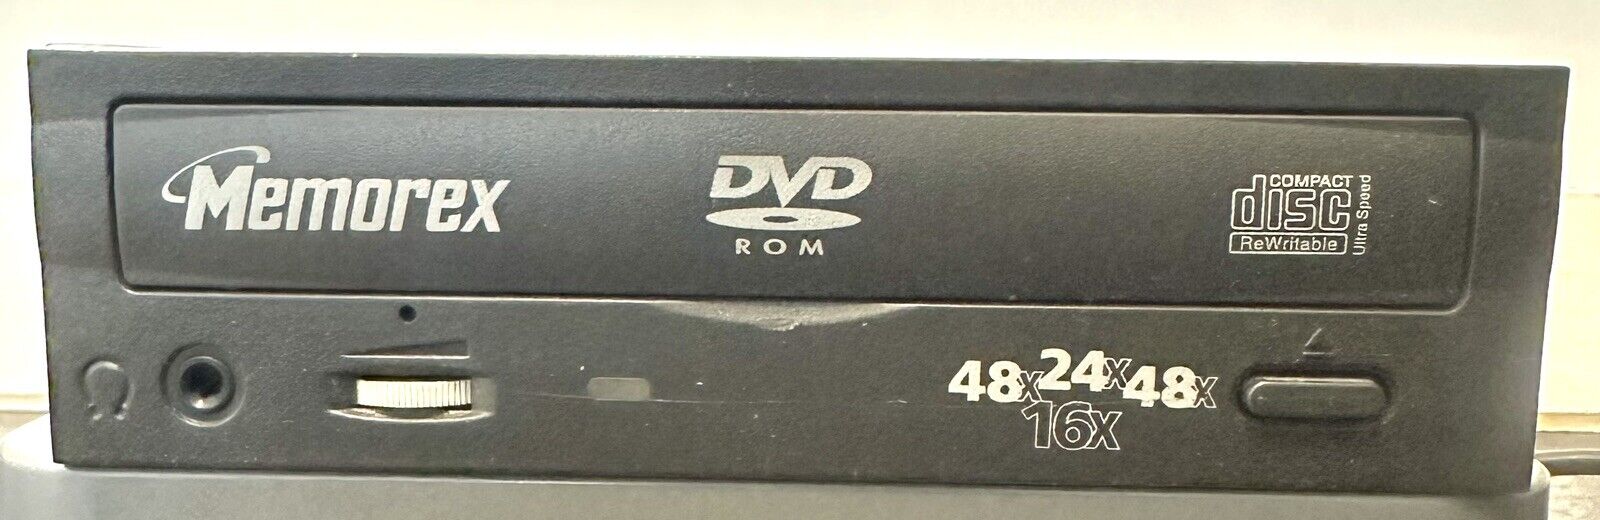 Memorex CD-RW DVD-Rom Drive MRX48244816AJI Rewritable Ultra Speed